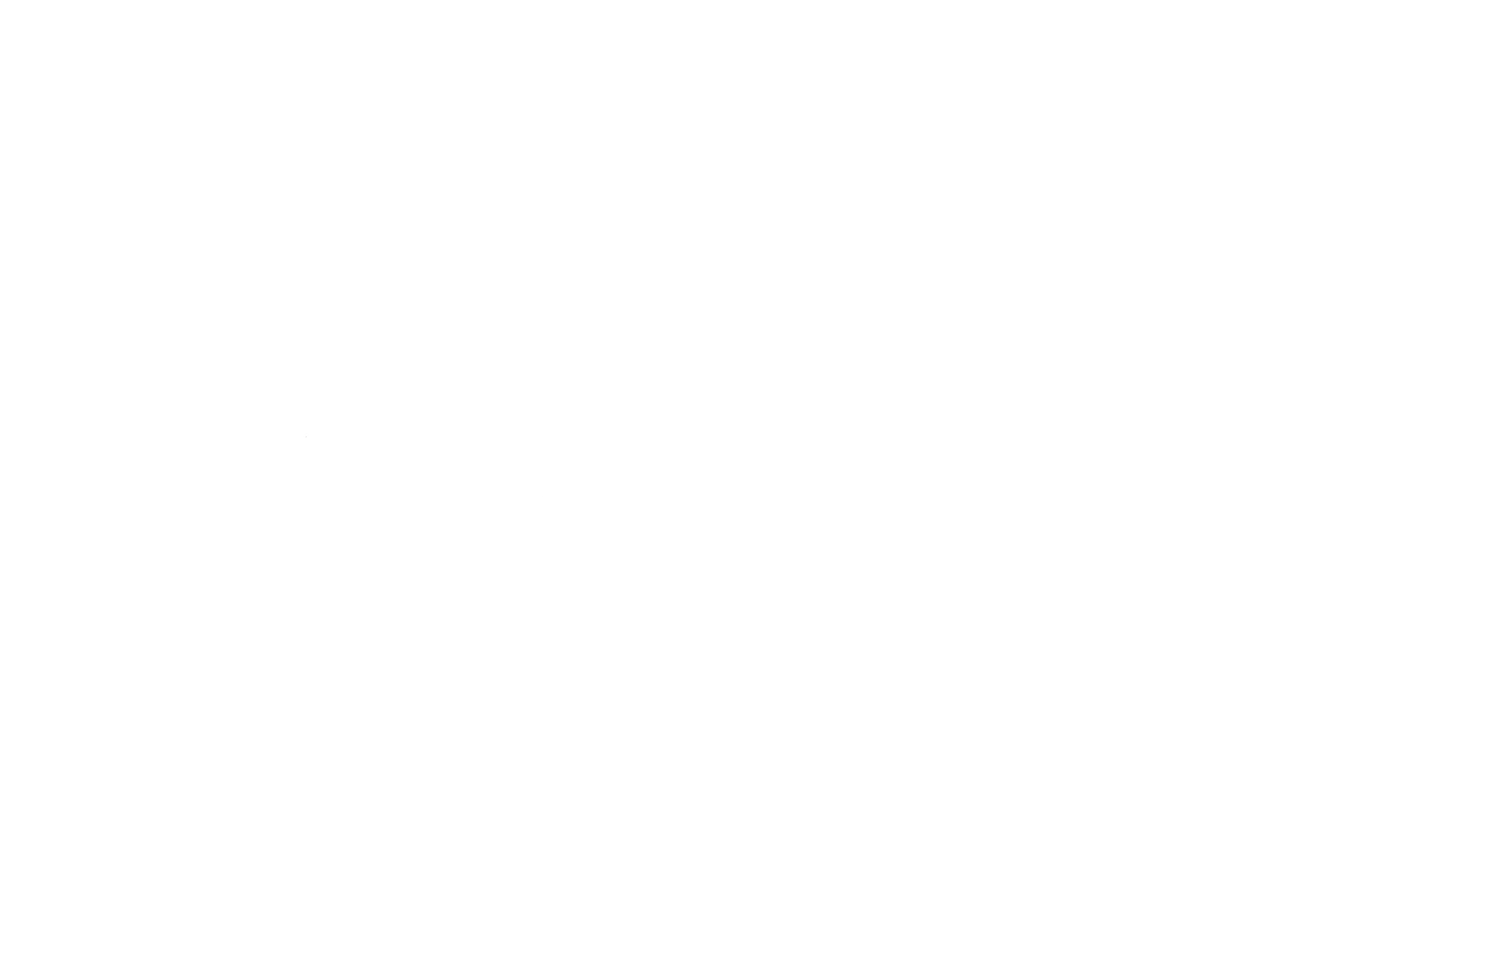 Goodman Photography